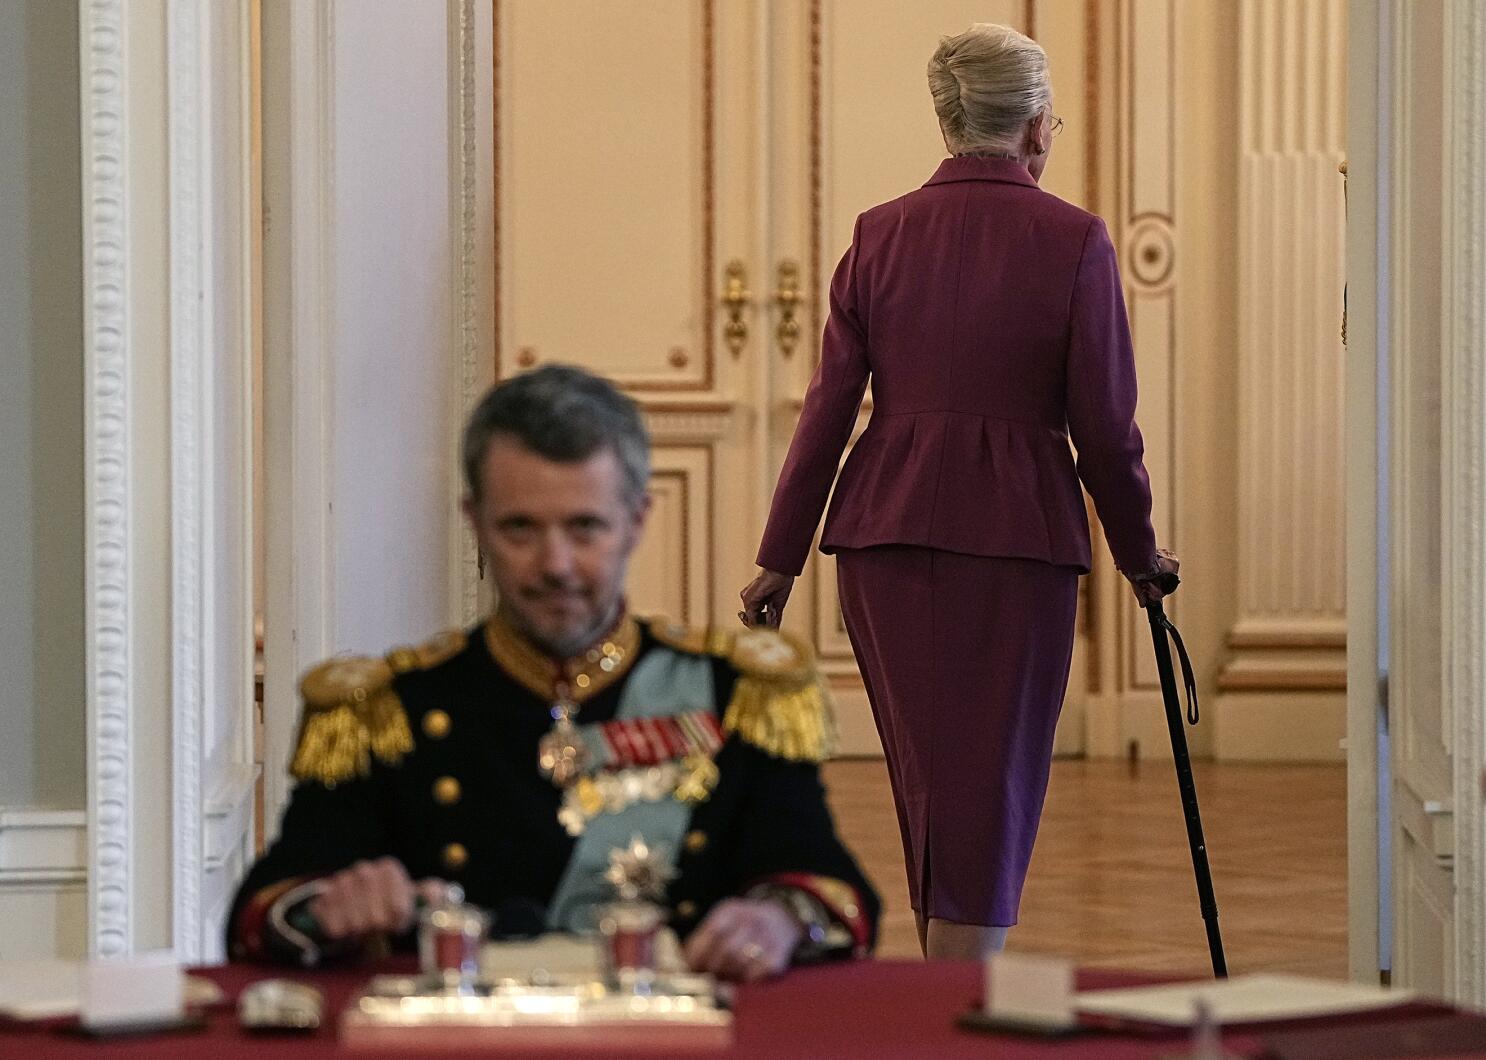 King Frederik sitting as his mother Queen Margrethe walks aways